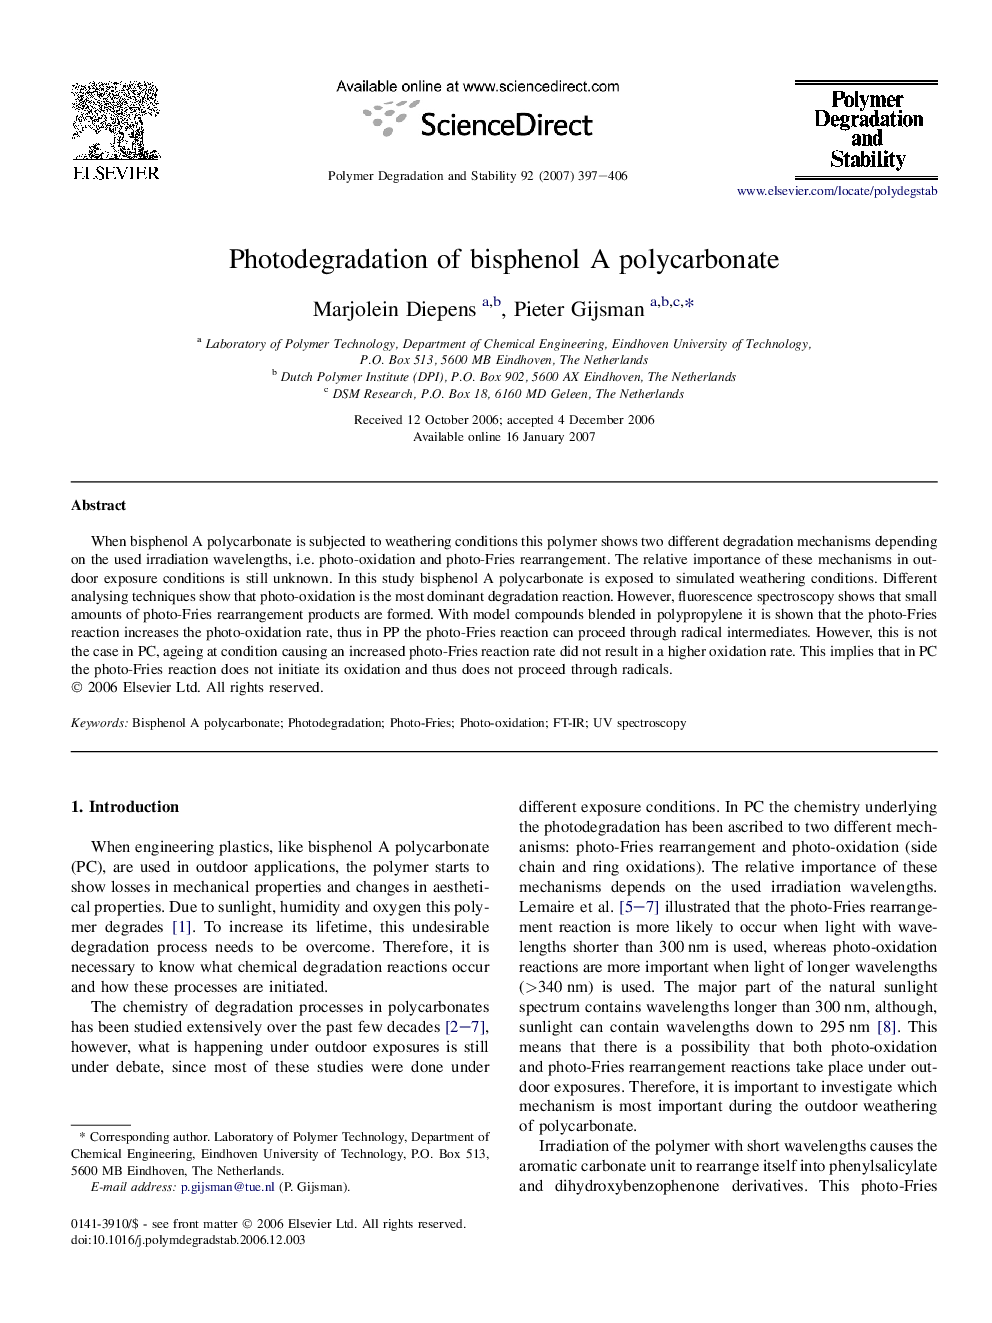 Photodegradation of bisphenol A polycarbonate